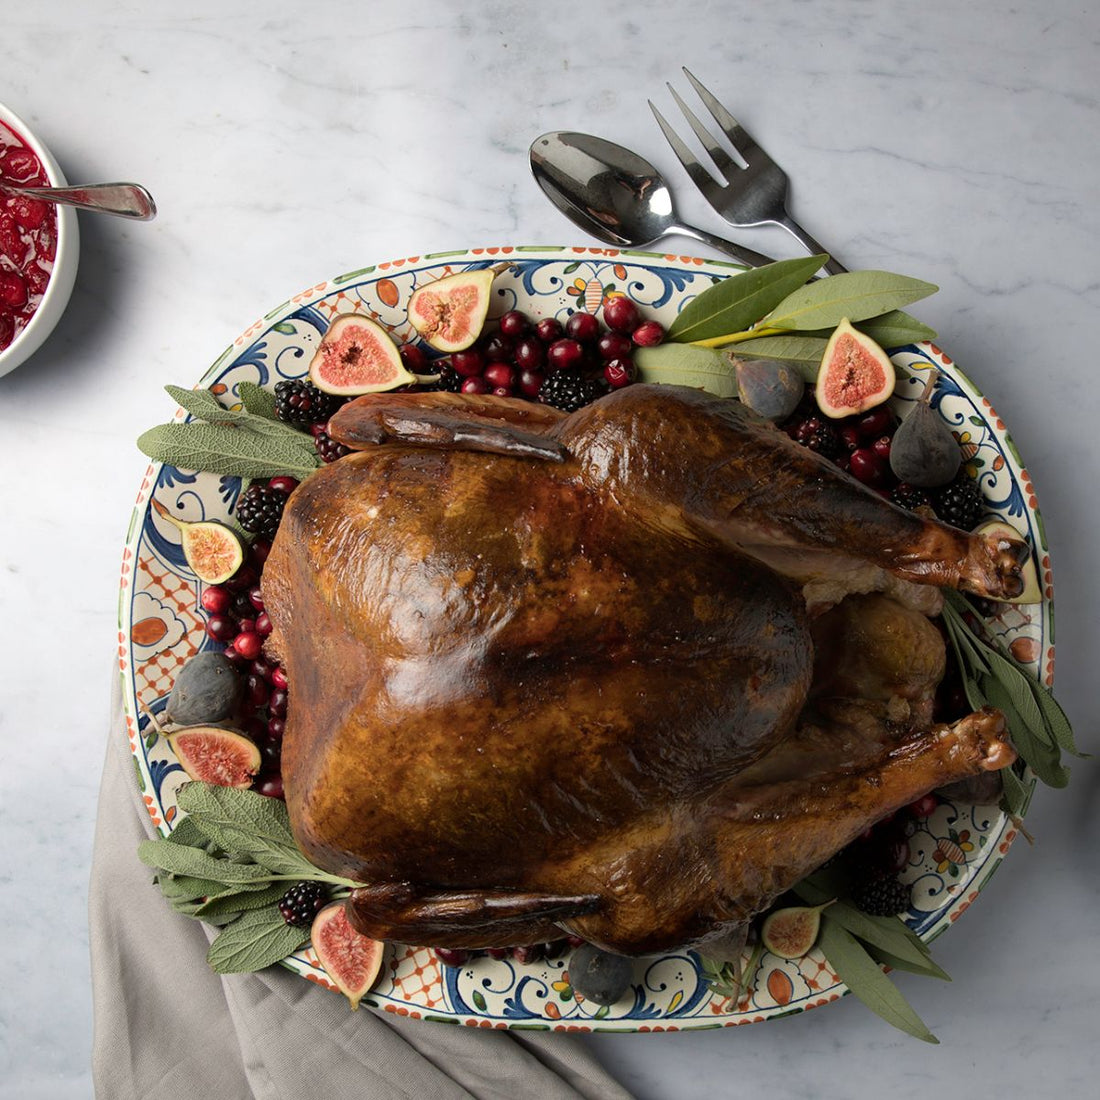 Why should you dry brine your turkey?